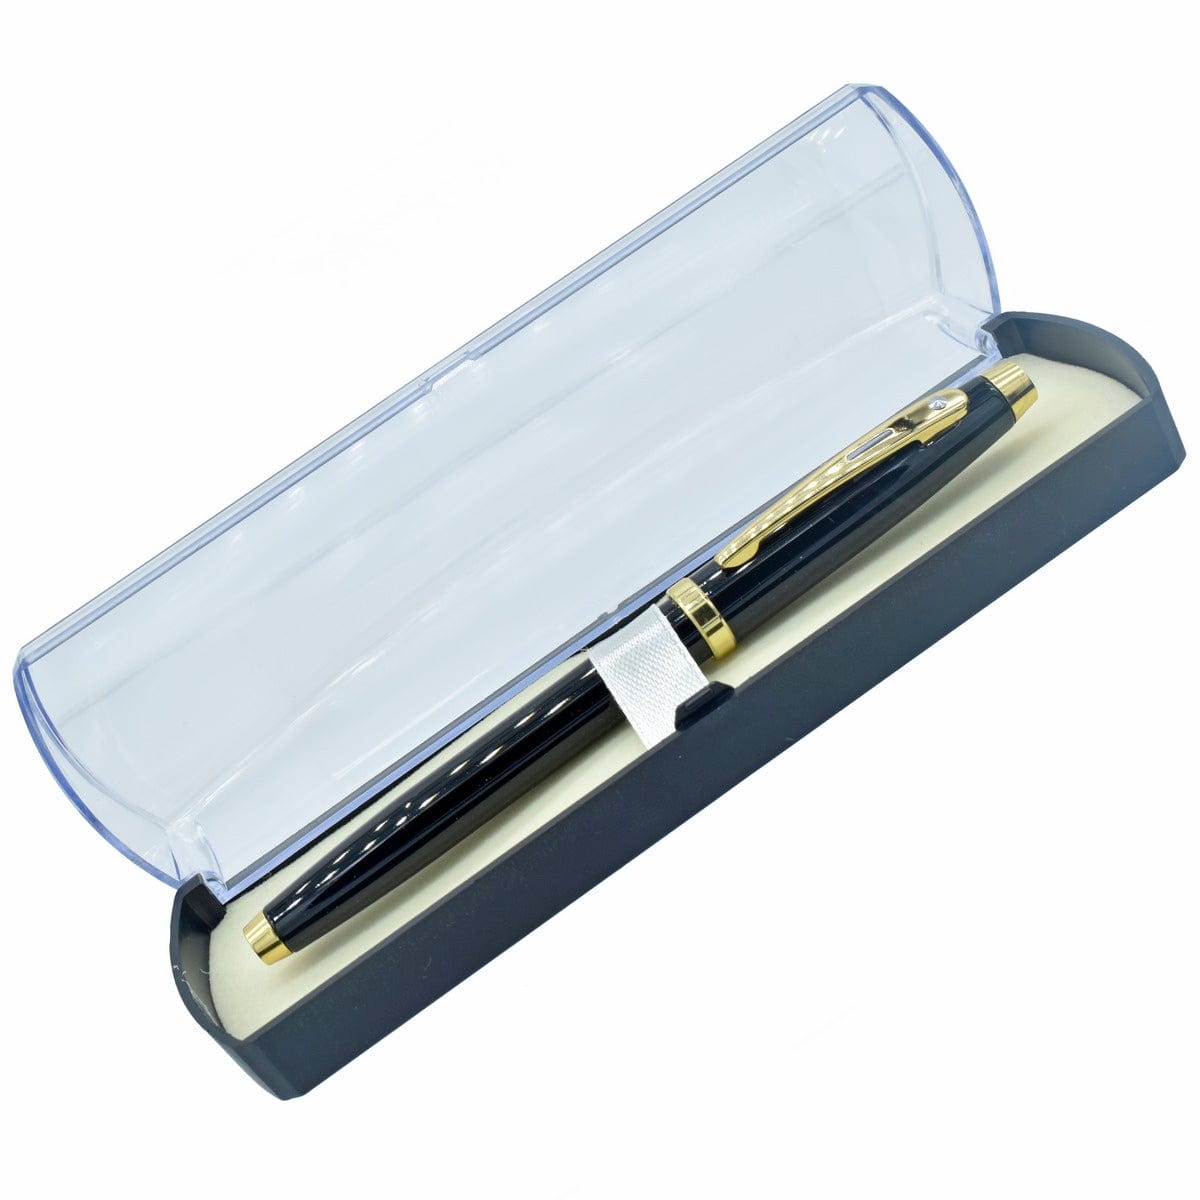 jags-mumbai Pen Roller Pen Blister Packing Black Gold Clip